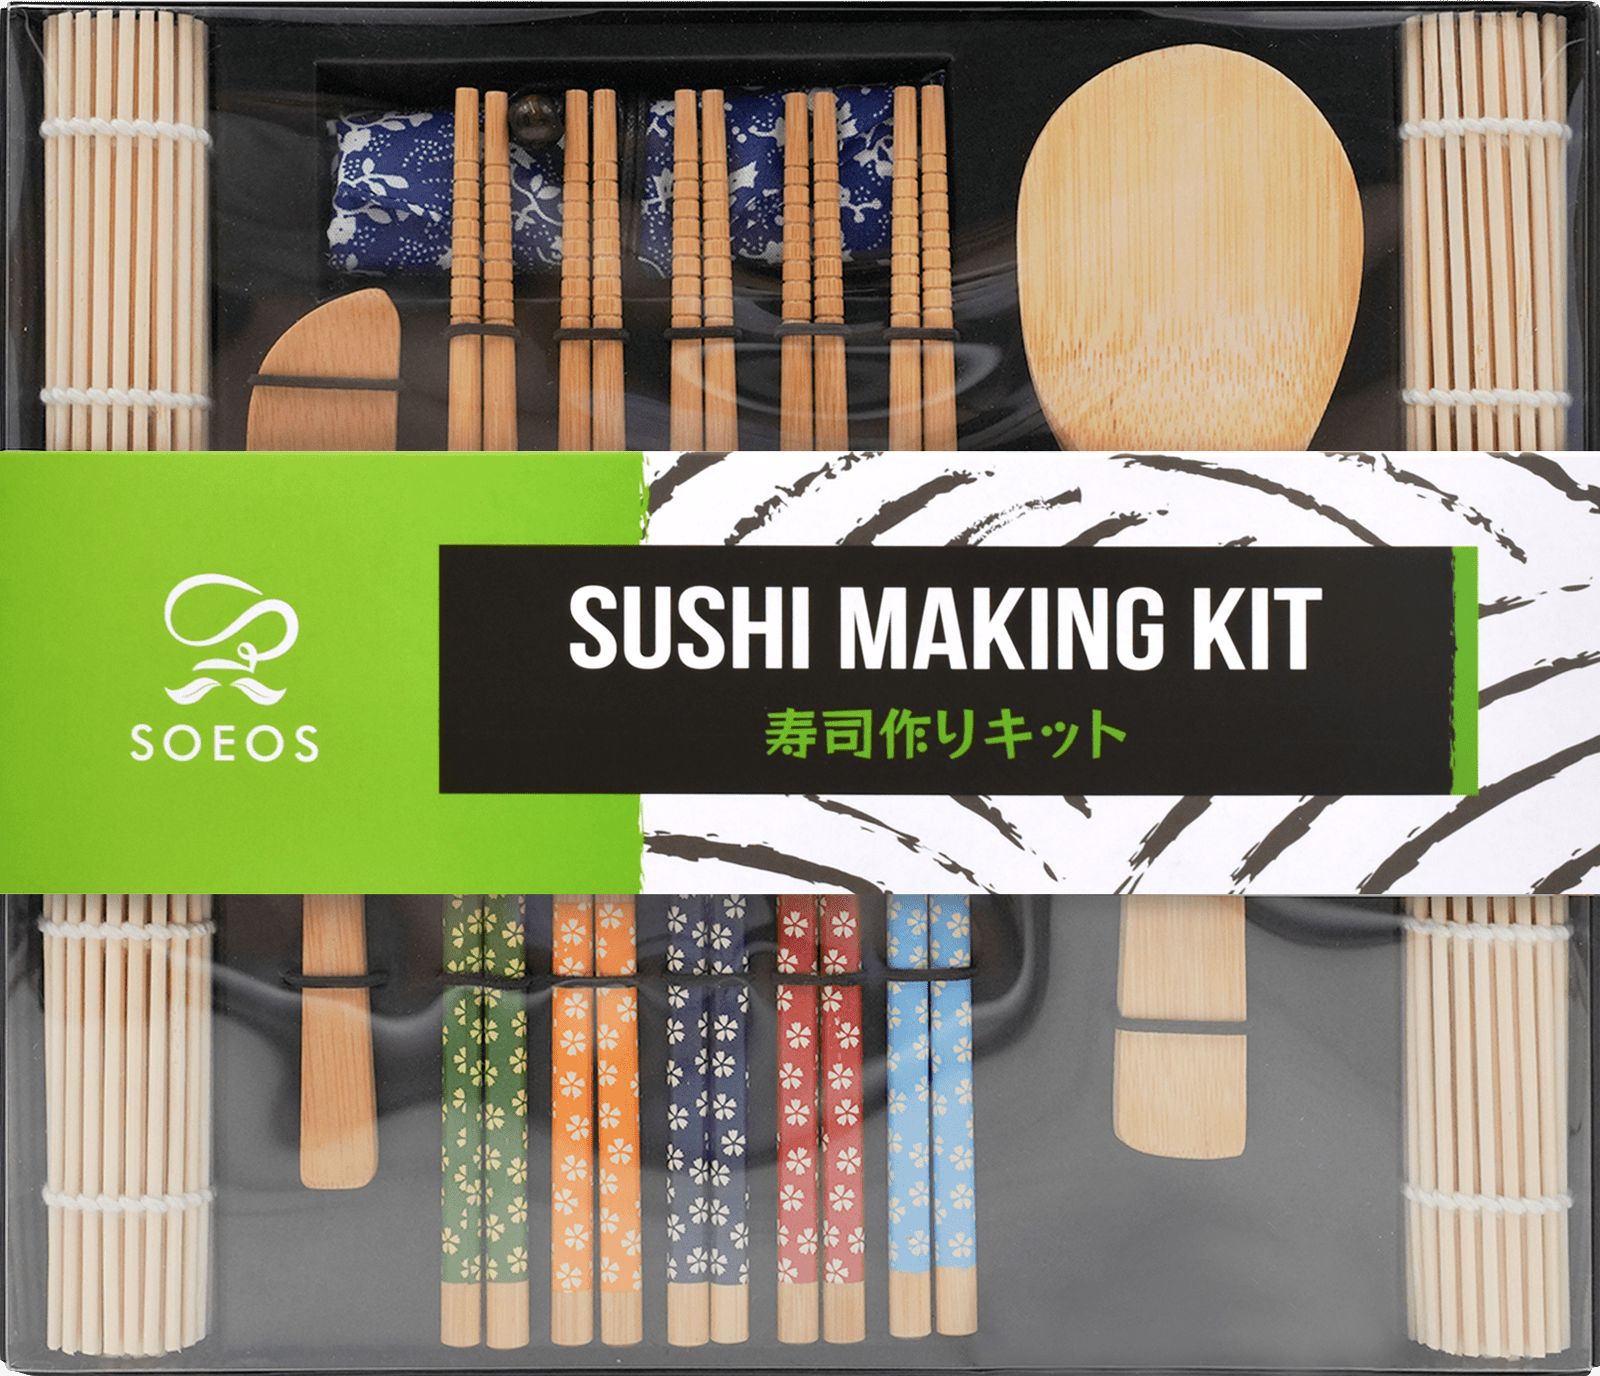 Soeos Beginner Sushi Making Kit 10 Piece, Complete Bamboo Sushi